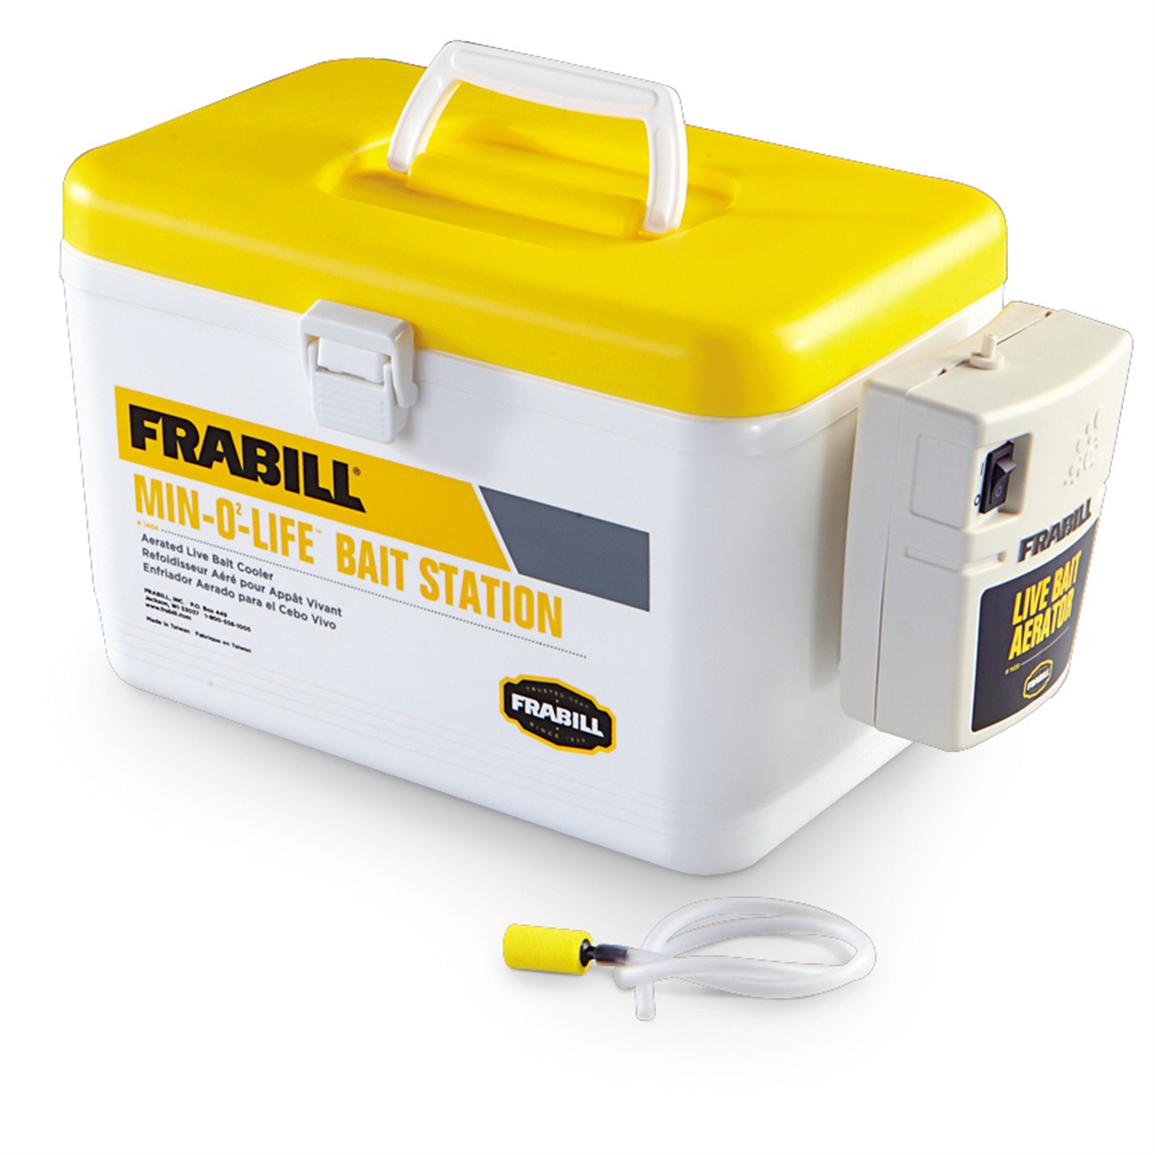 Frabill 8-qt. Min-O-Life Bait Station Cooler, Yellow / White